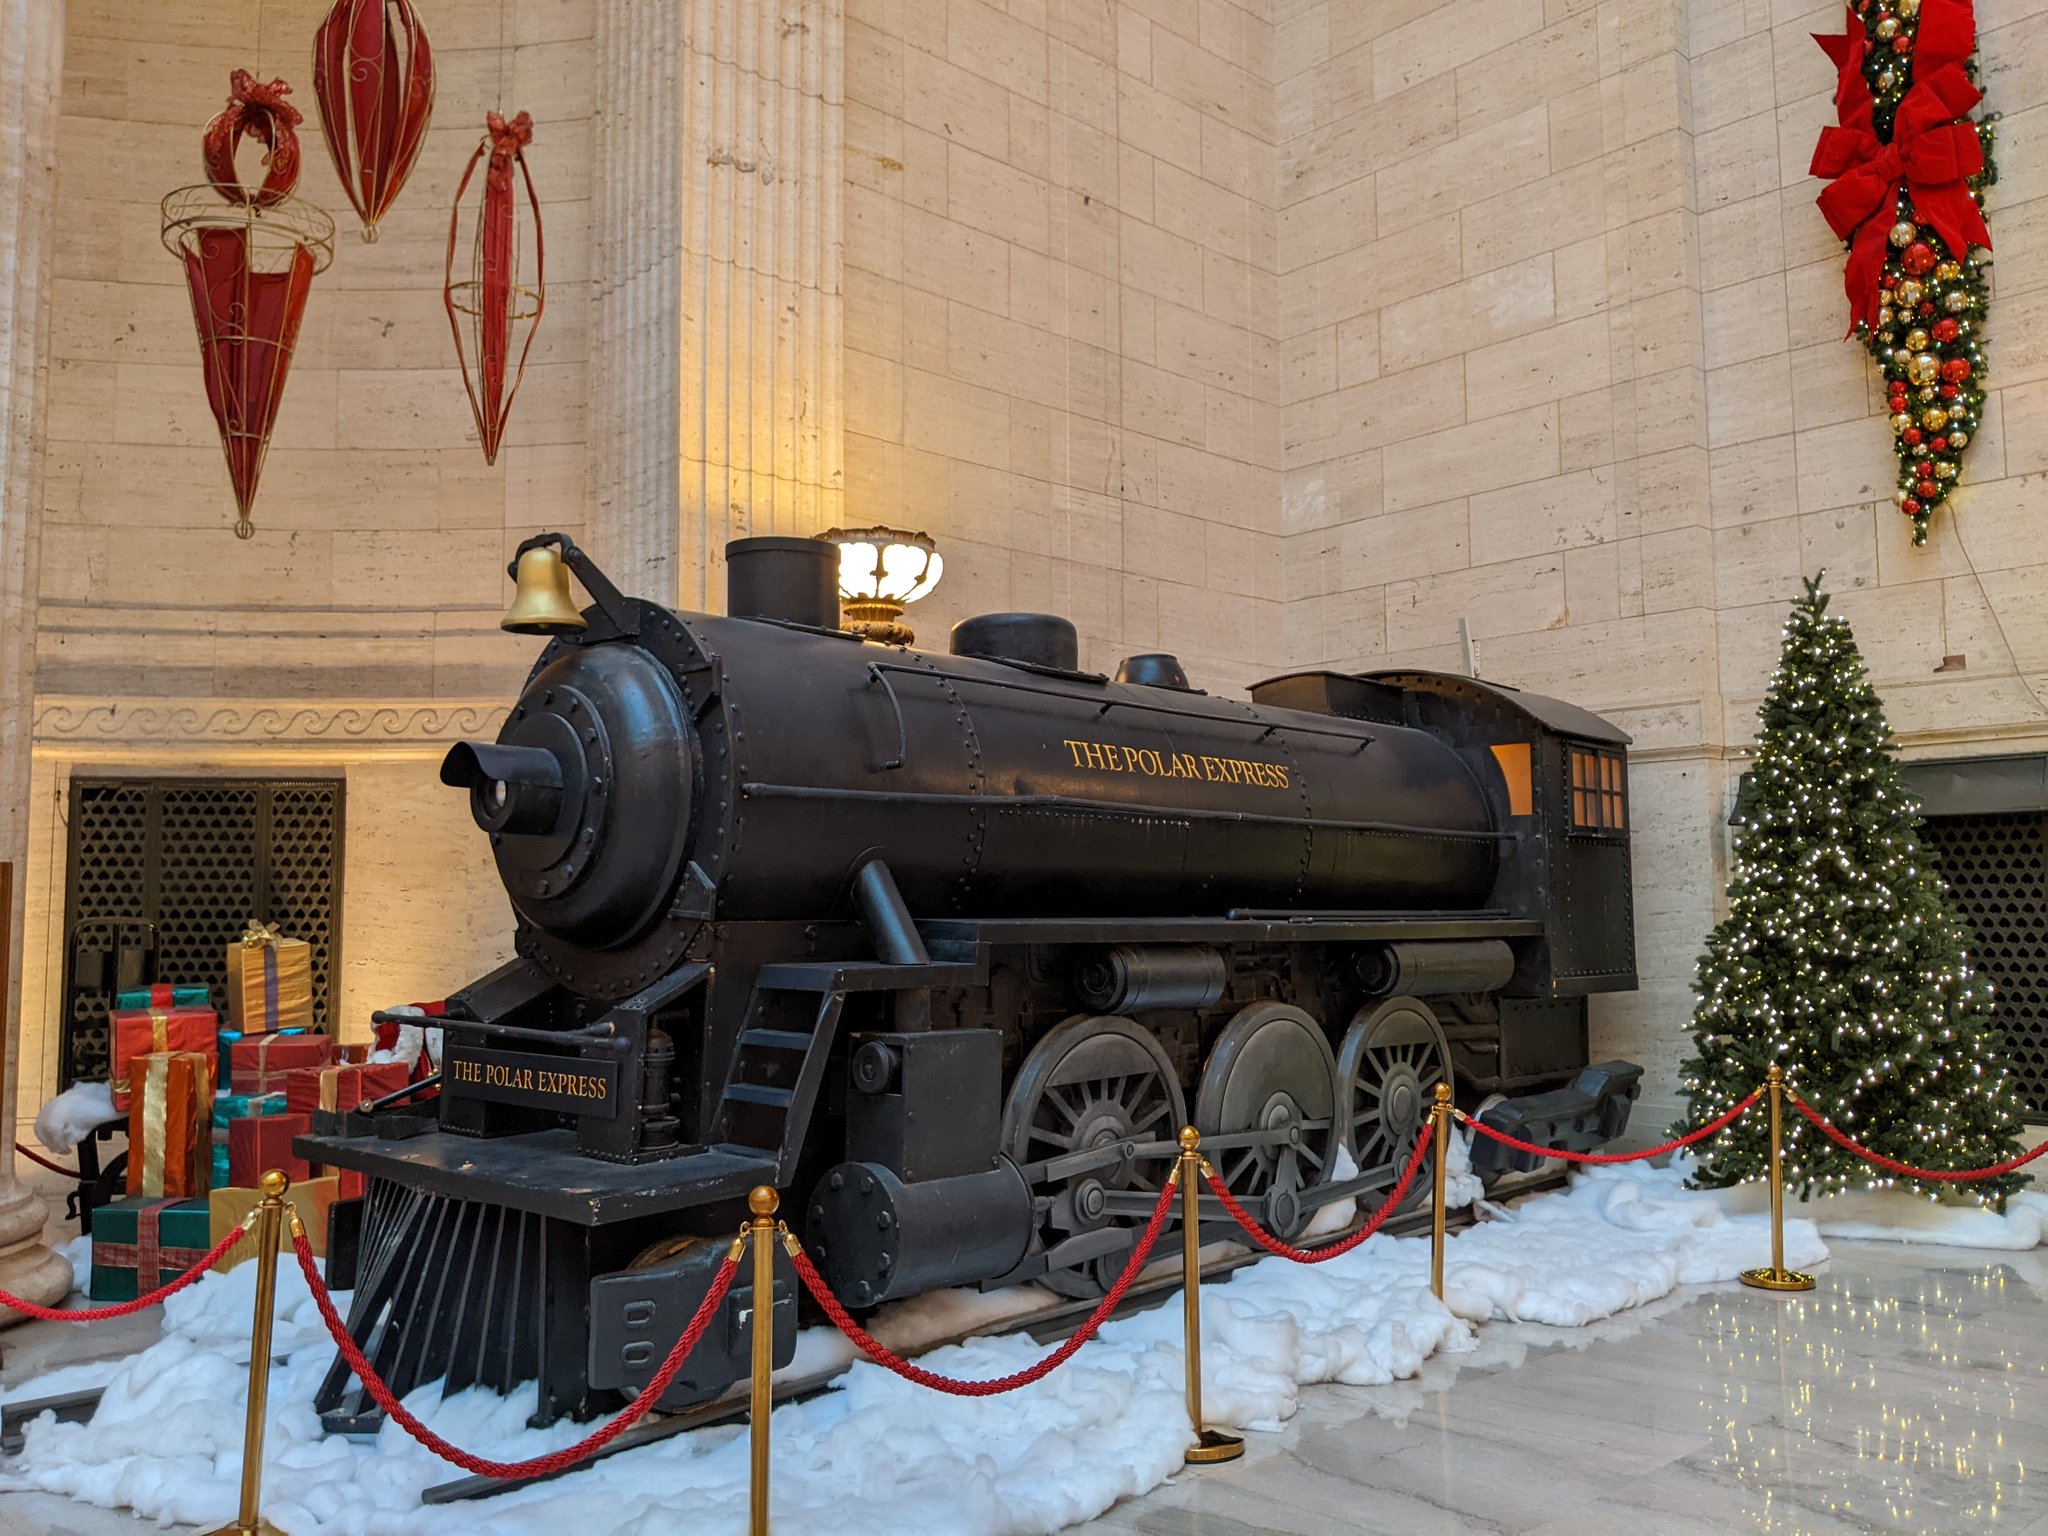 Polar Express decoration in Union Station